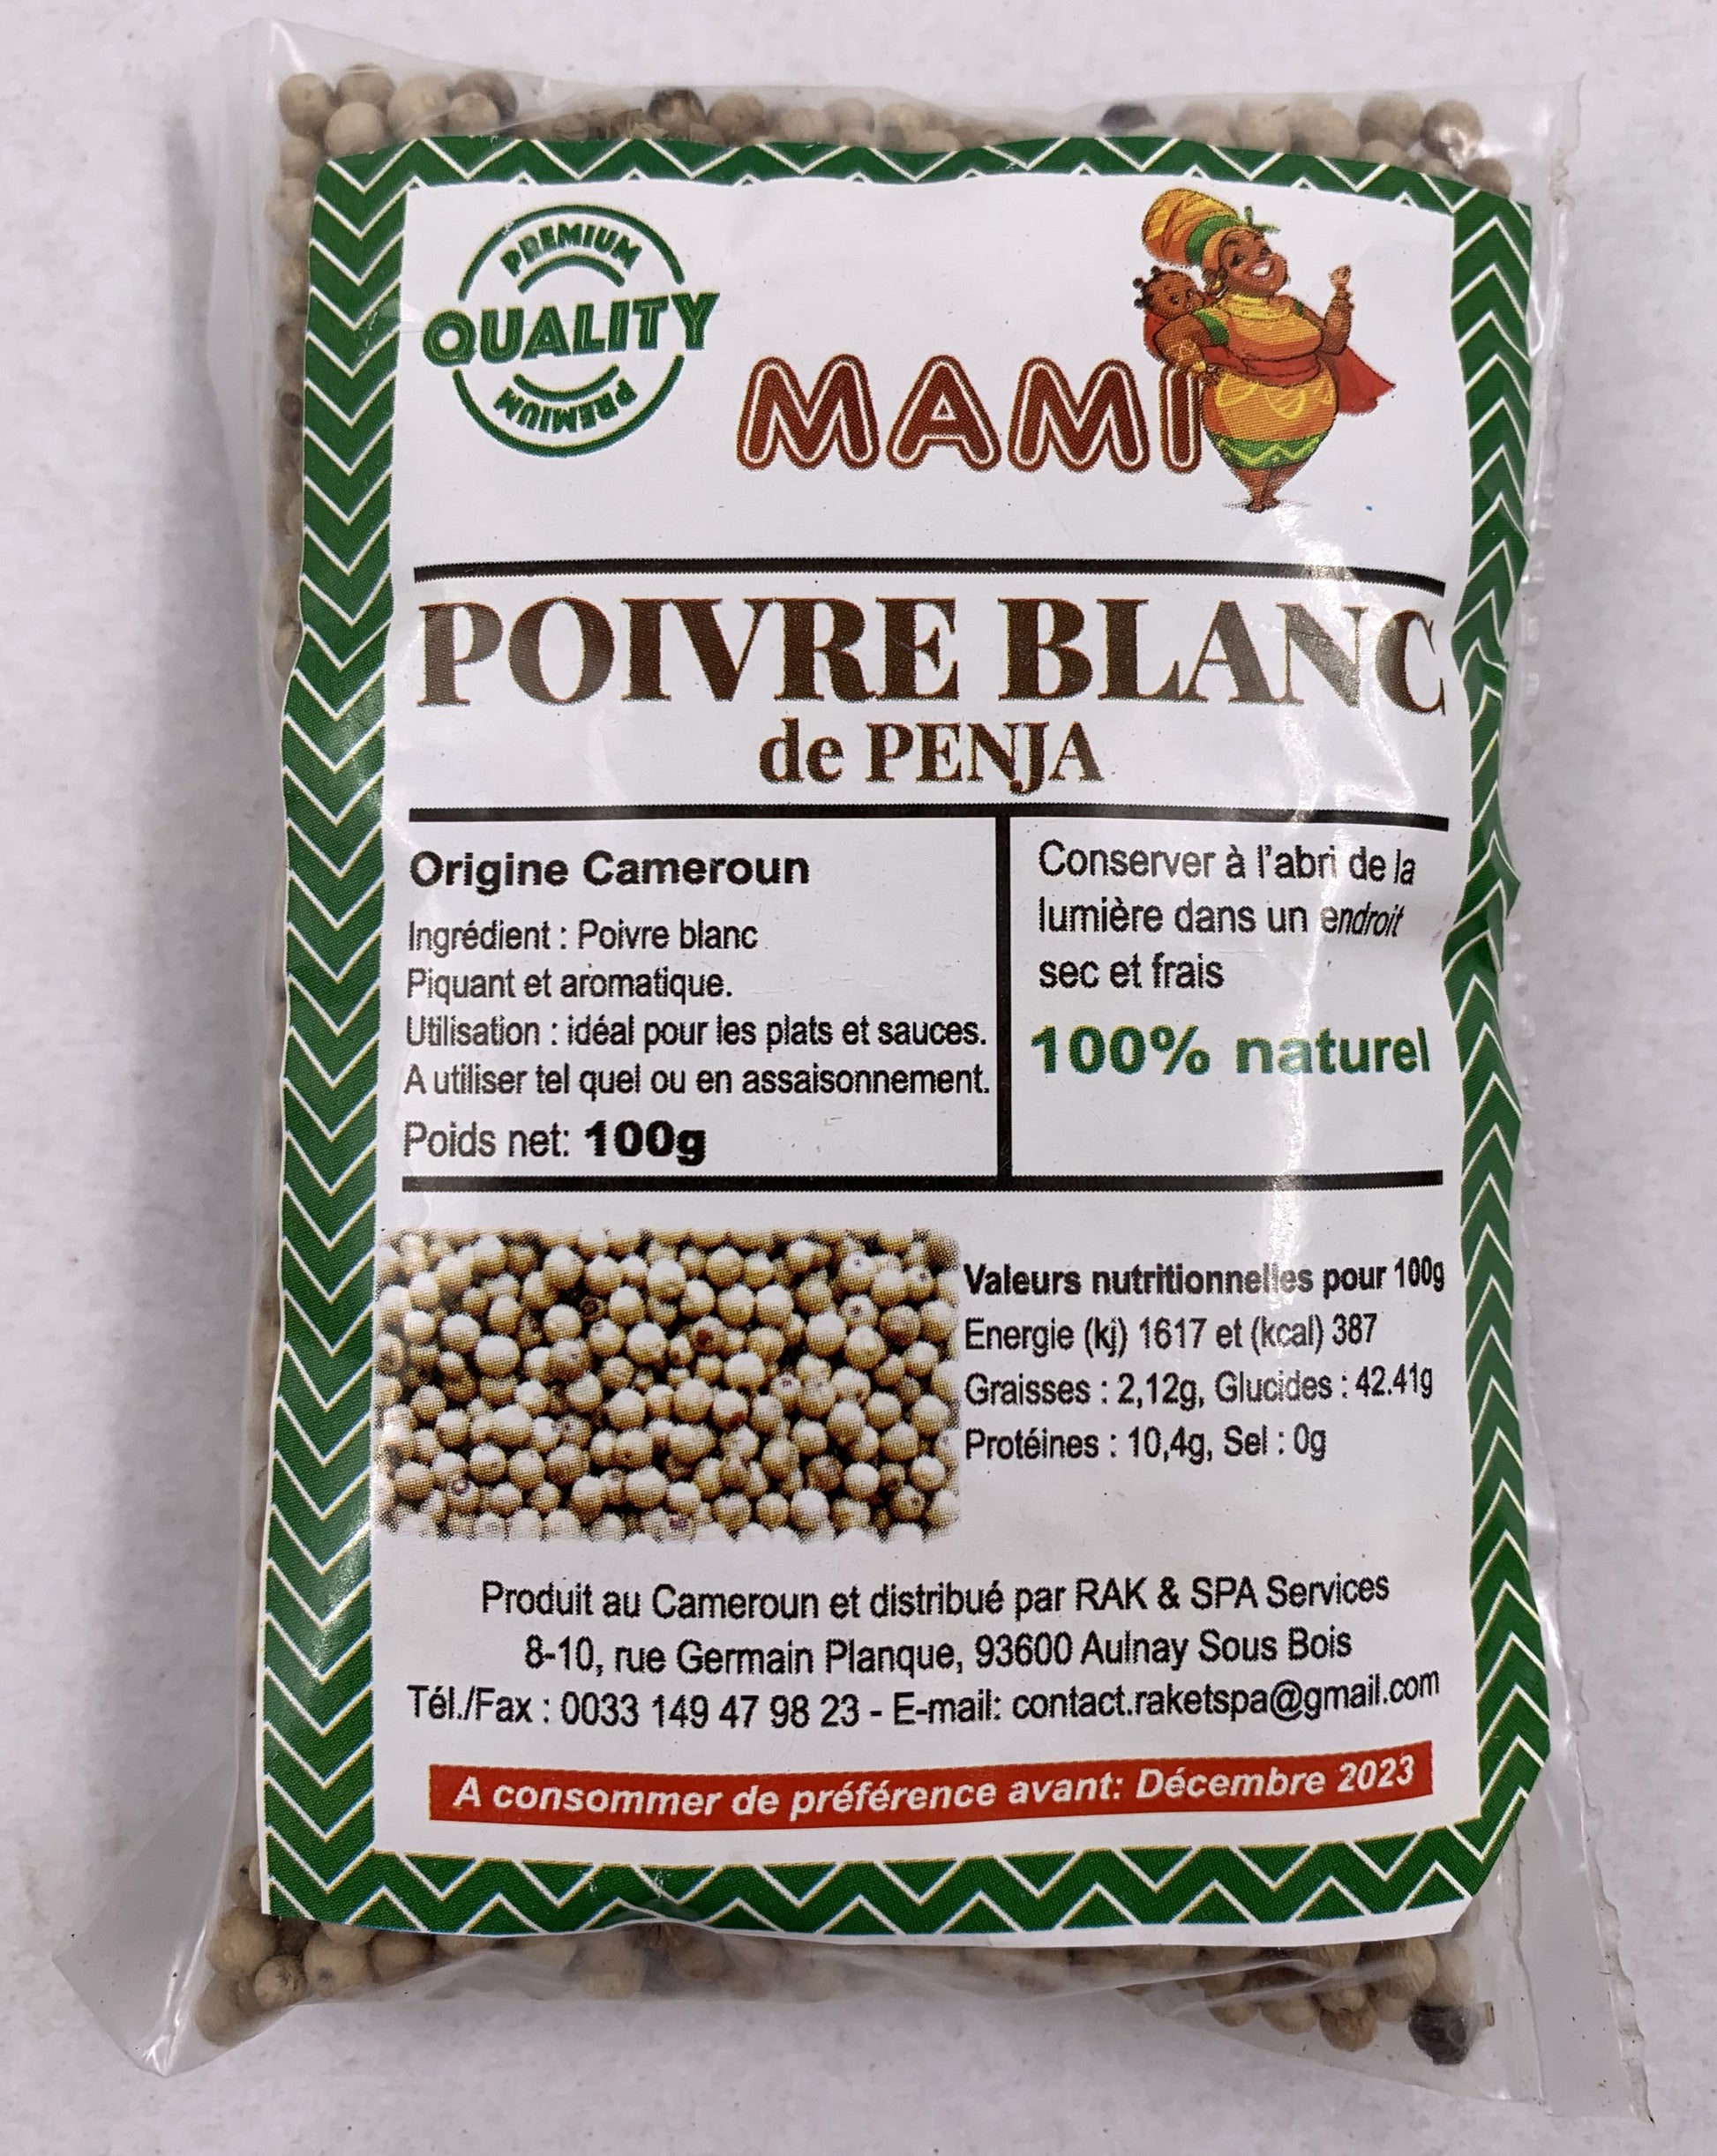 CONDIMENTS SEASONING) Pepper White Penja - Poivre Blanc de Penja